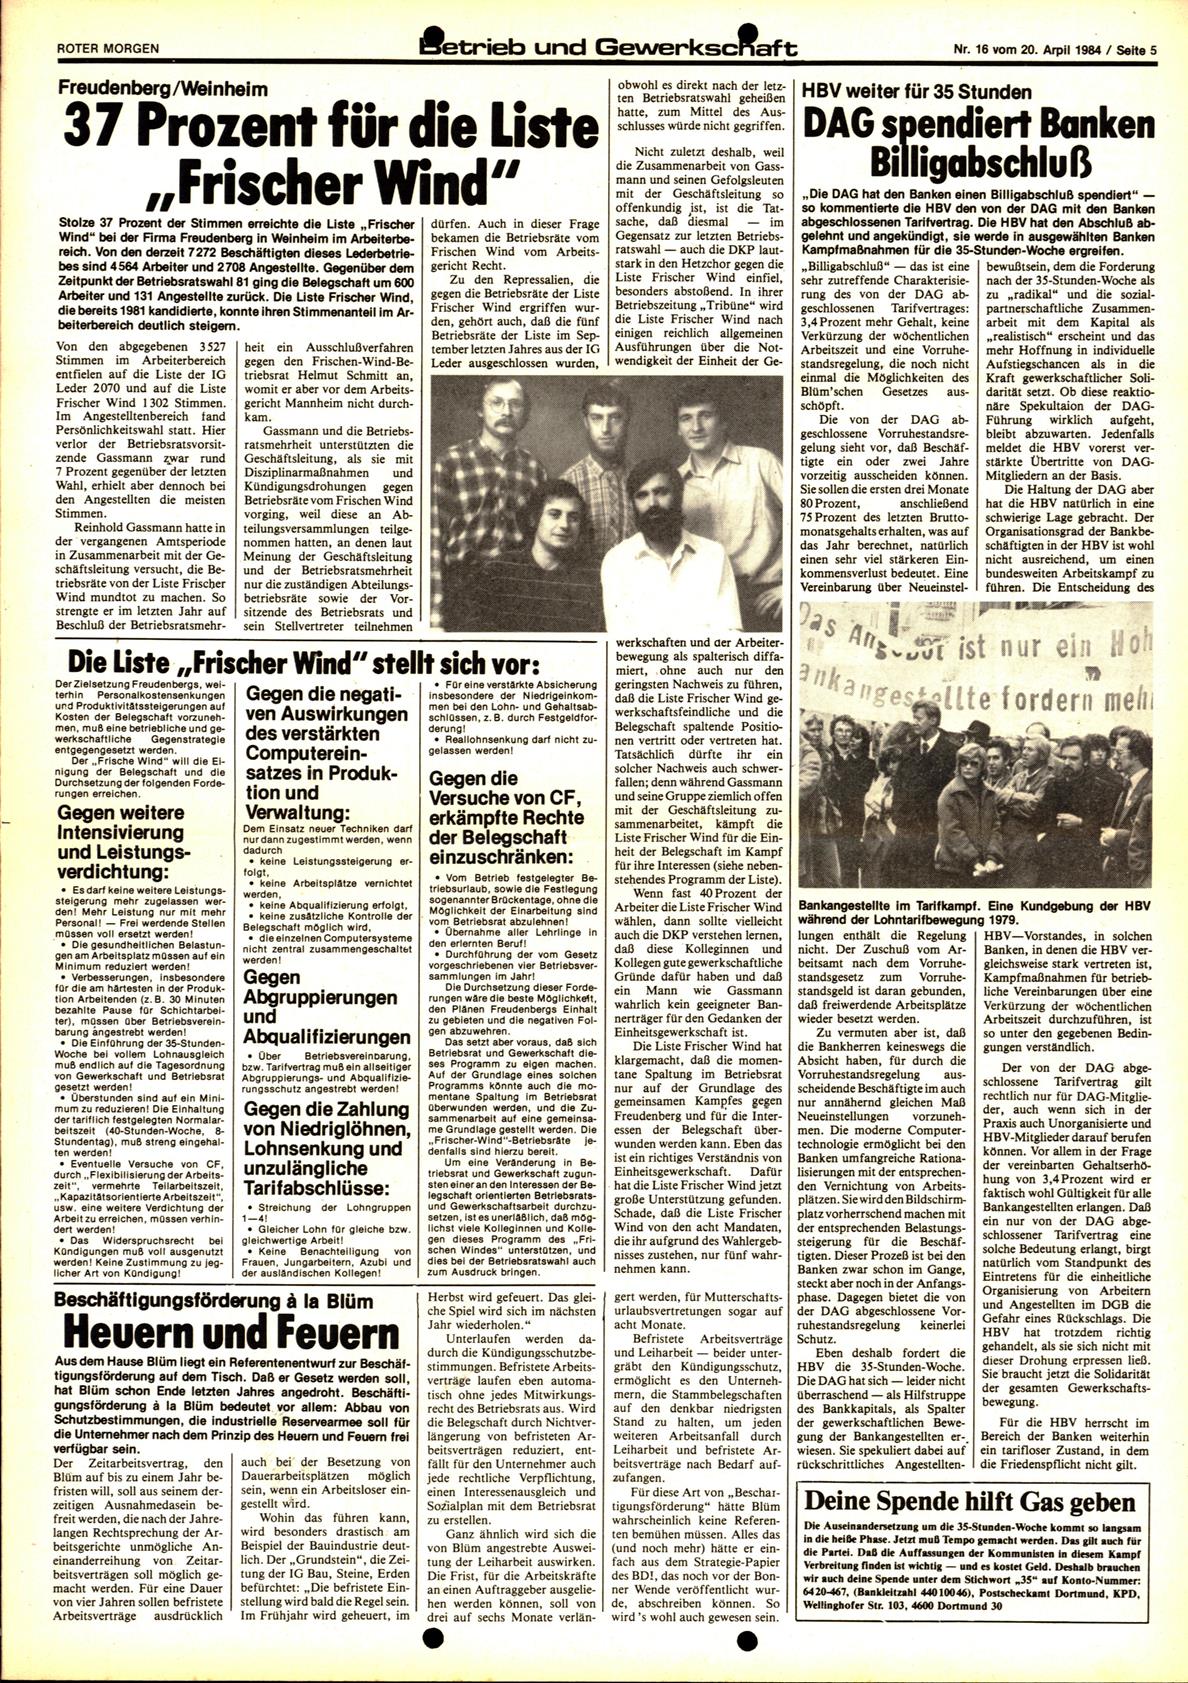 Roter Morgen, 18. Jg., 20. April 1984, Nr. 16, Seite 5